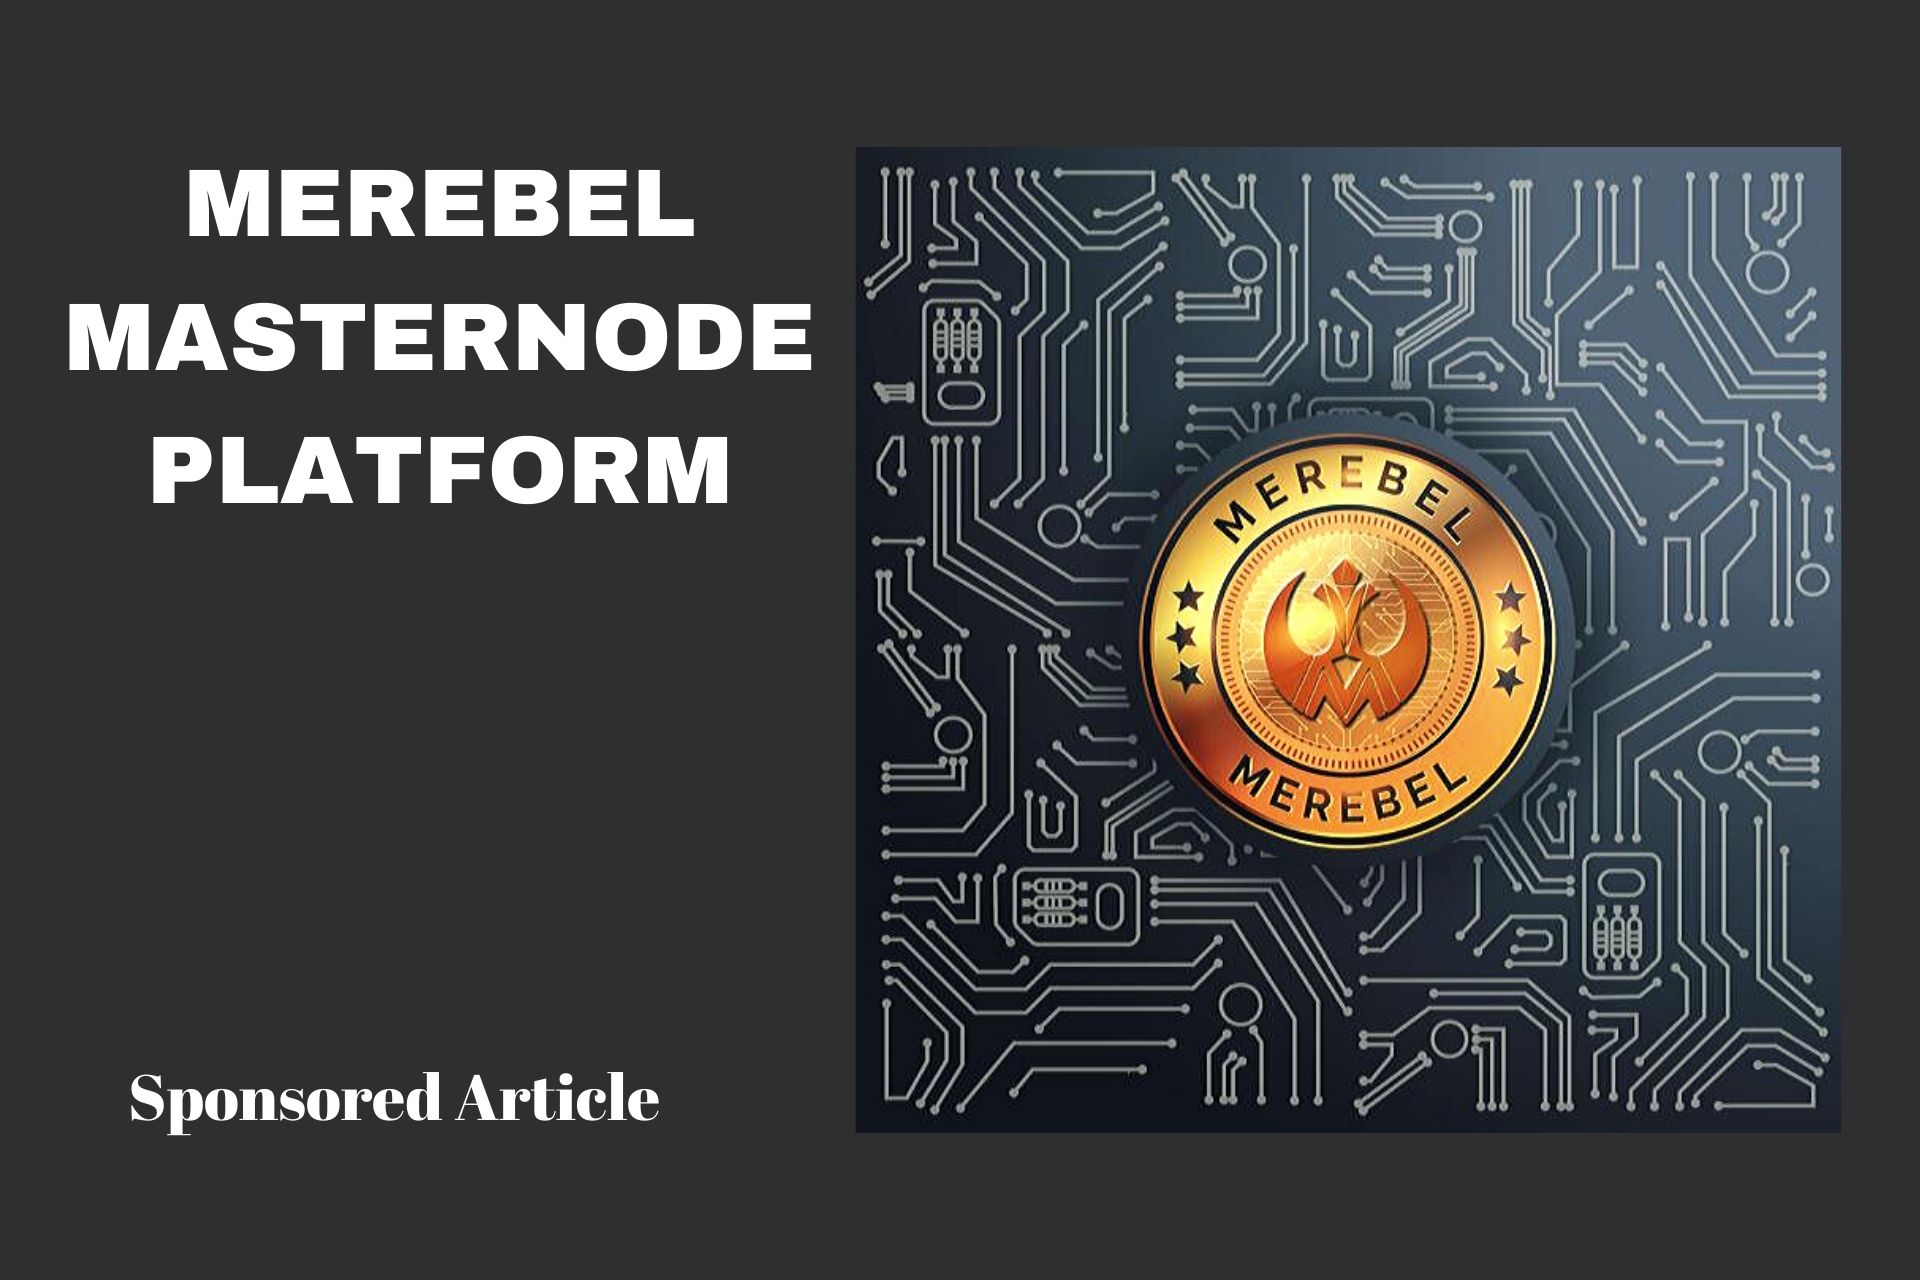 MEREBEL masternode platform